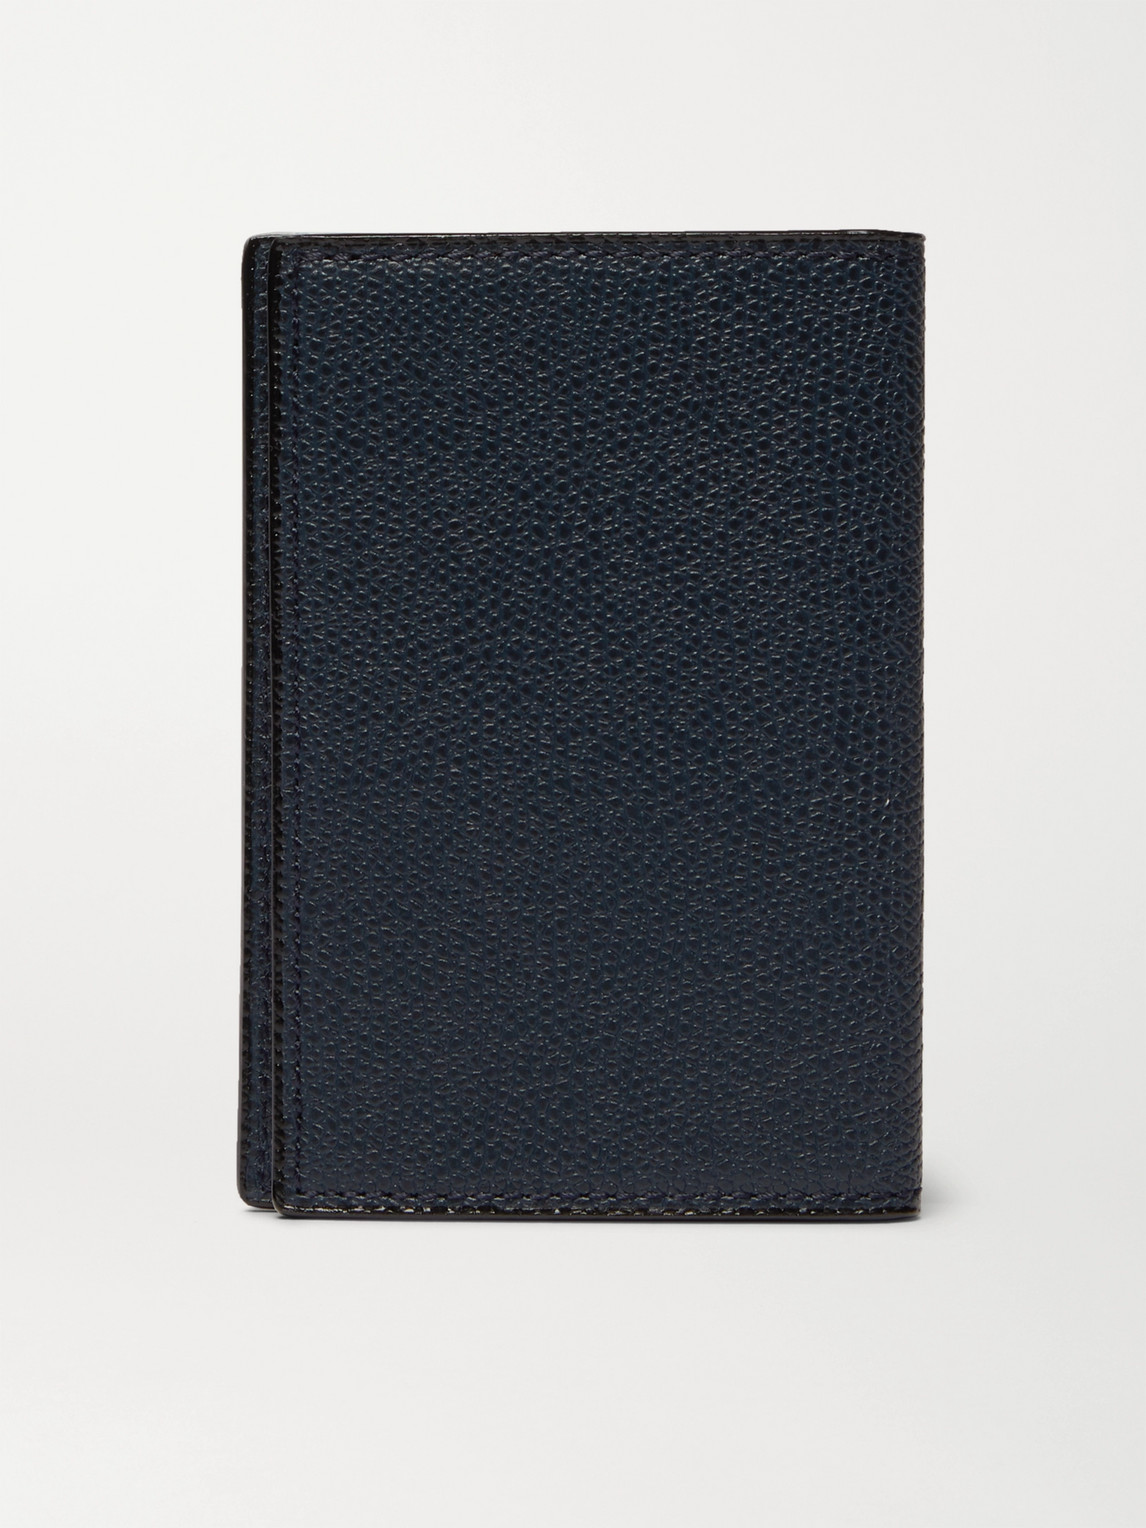 Valextra Pebble-grain Leather Cardholder In Blue